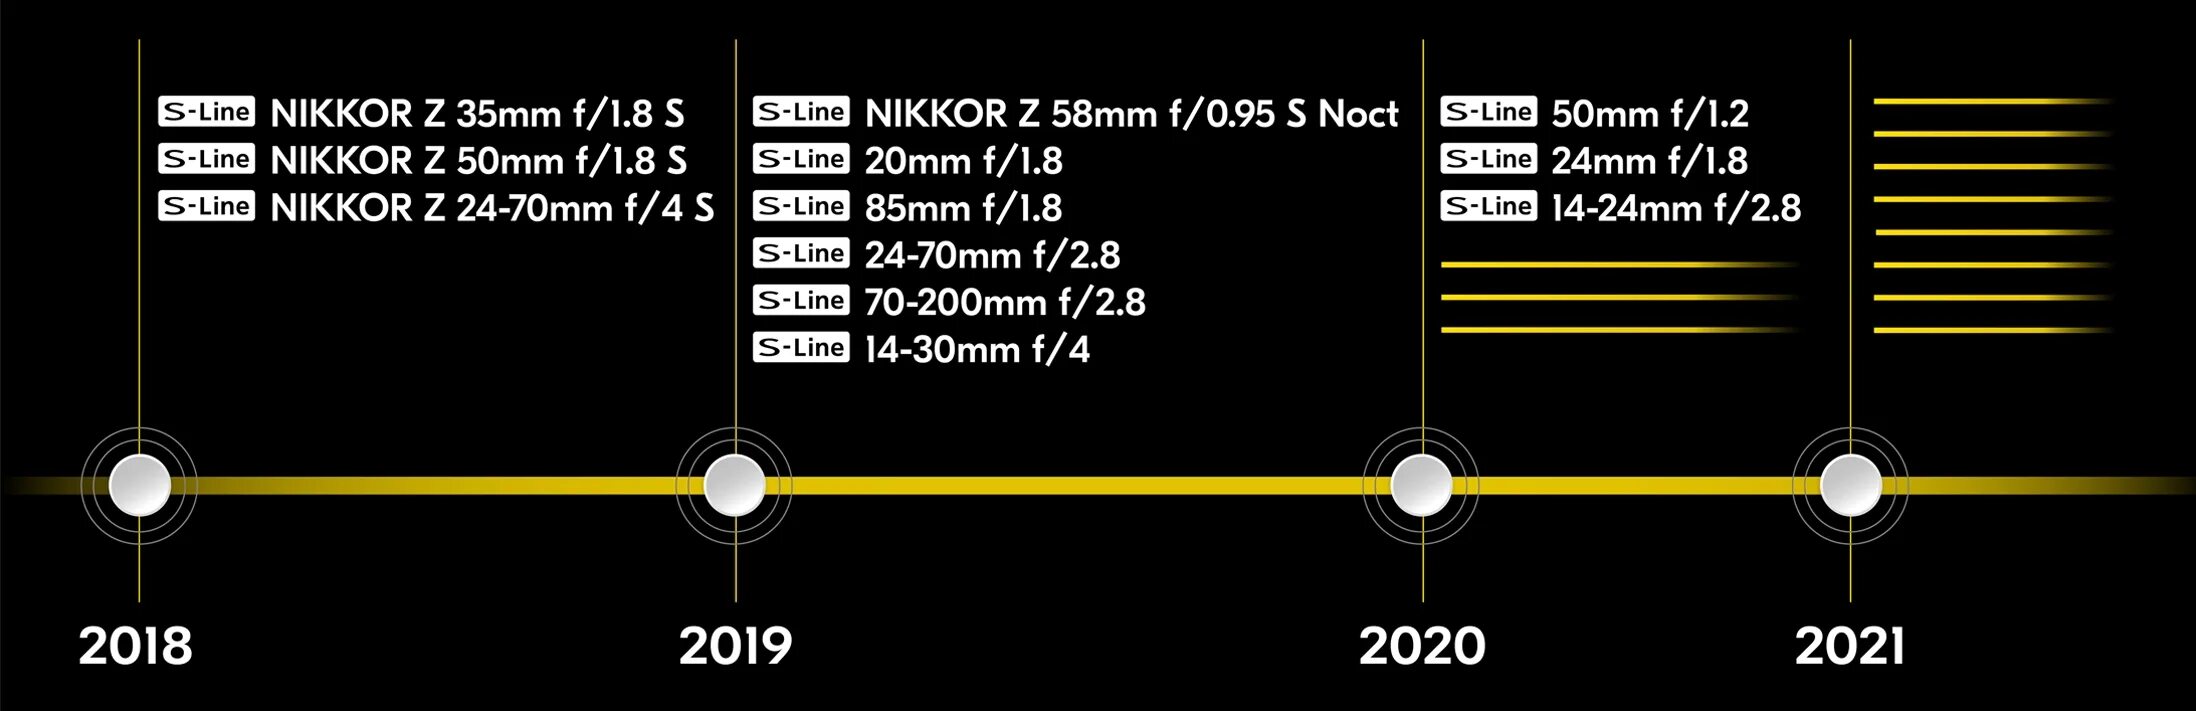 Nikon z Lens Roadmap. Nikon Roadmap 2022. Nikon Cameras Roadmap. Дорожная карта объективов Nikon z. 28 линия 3